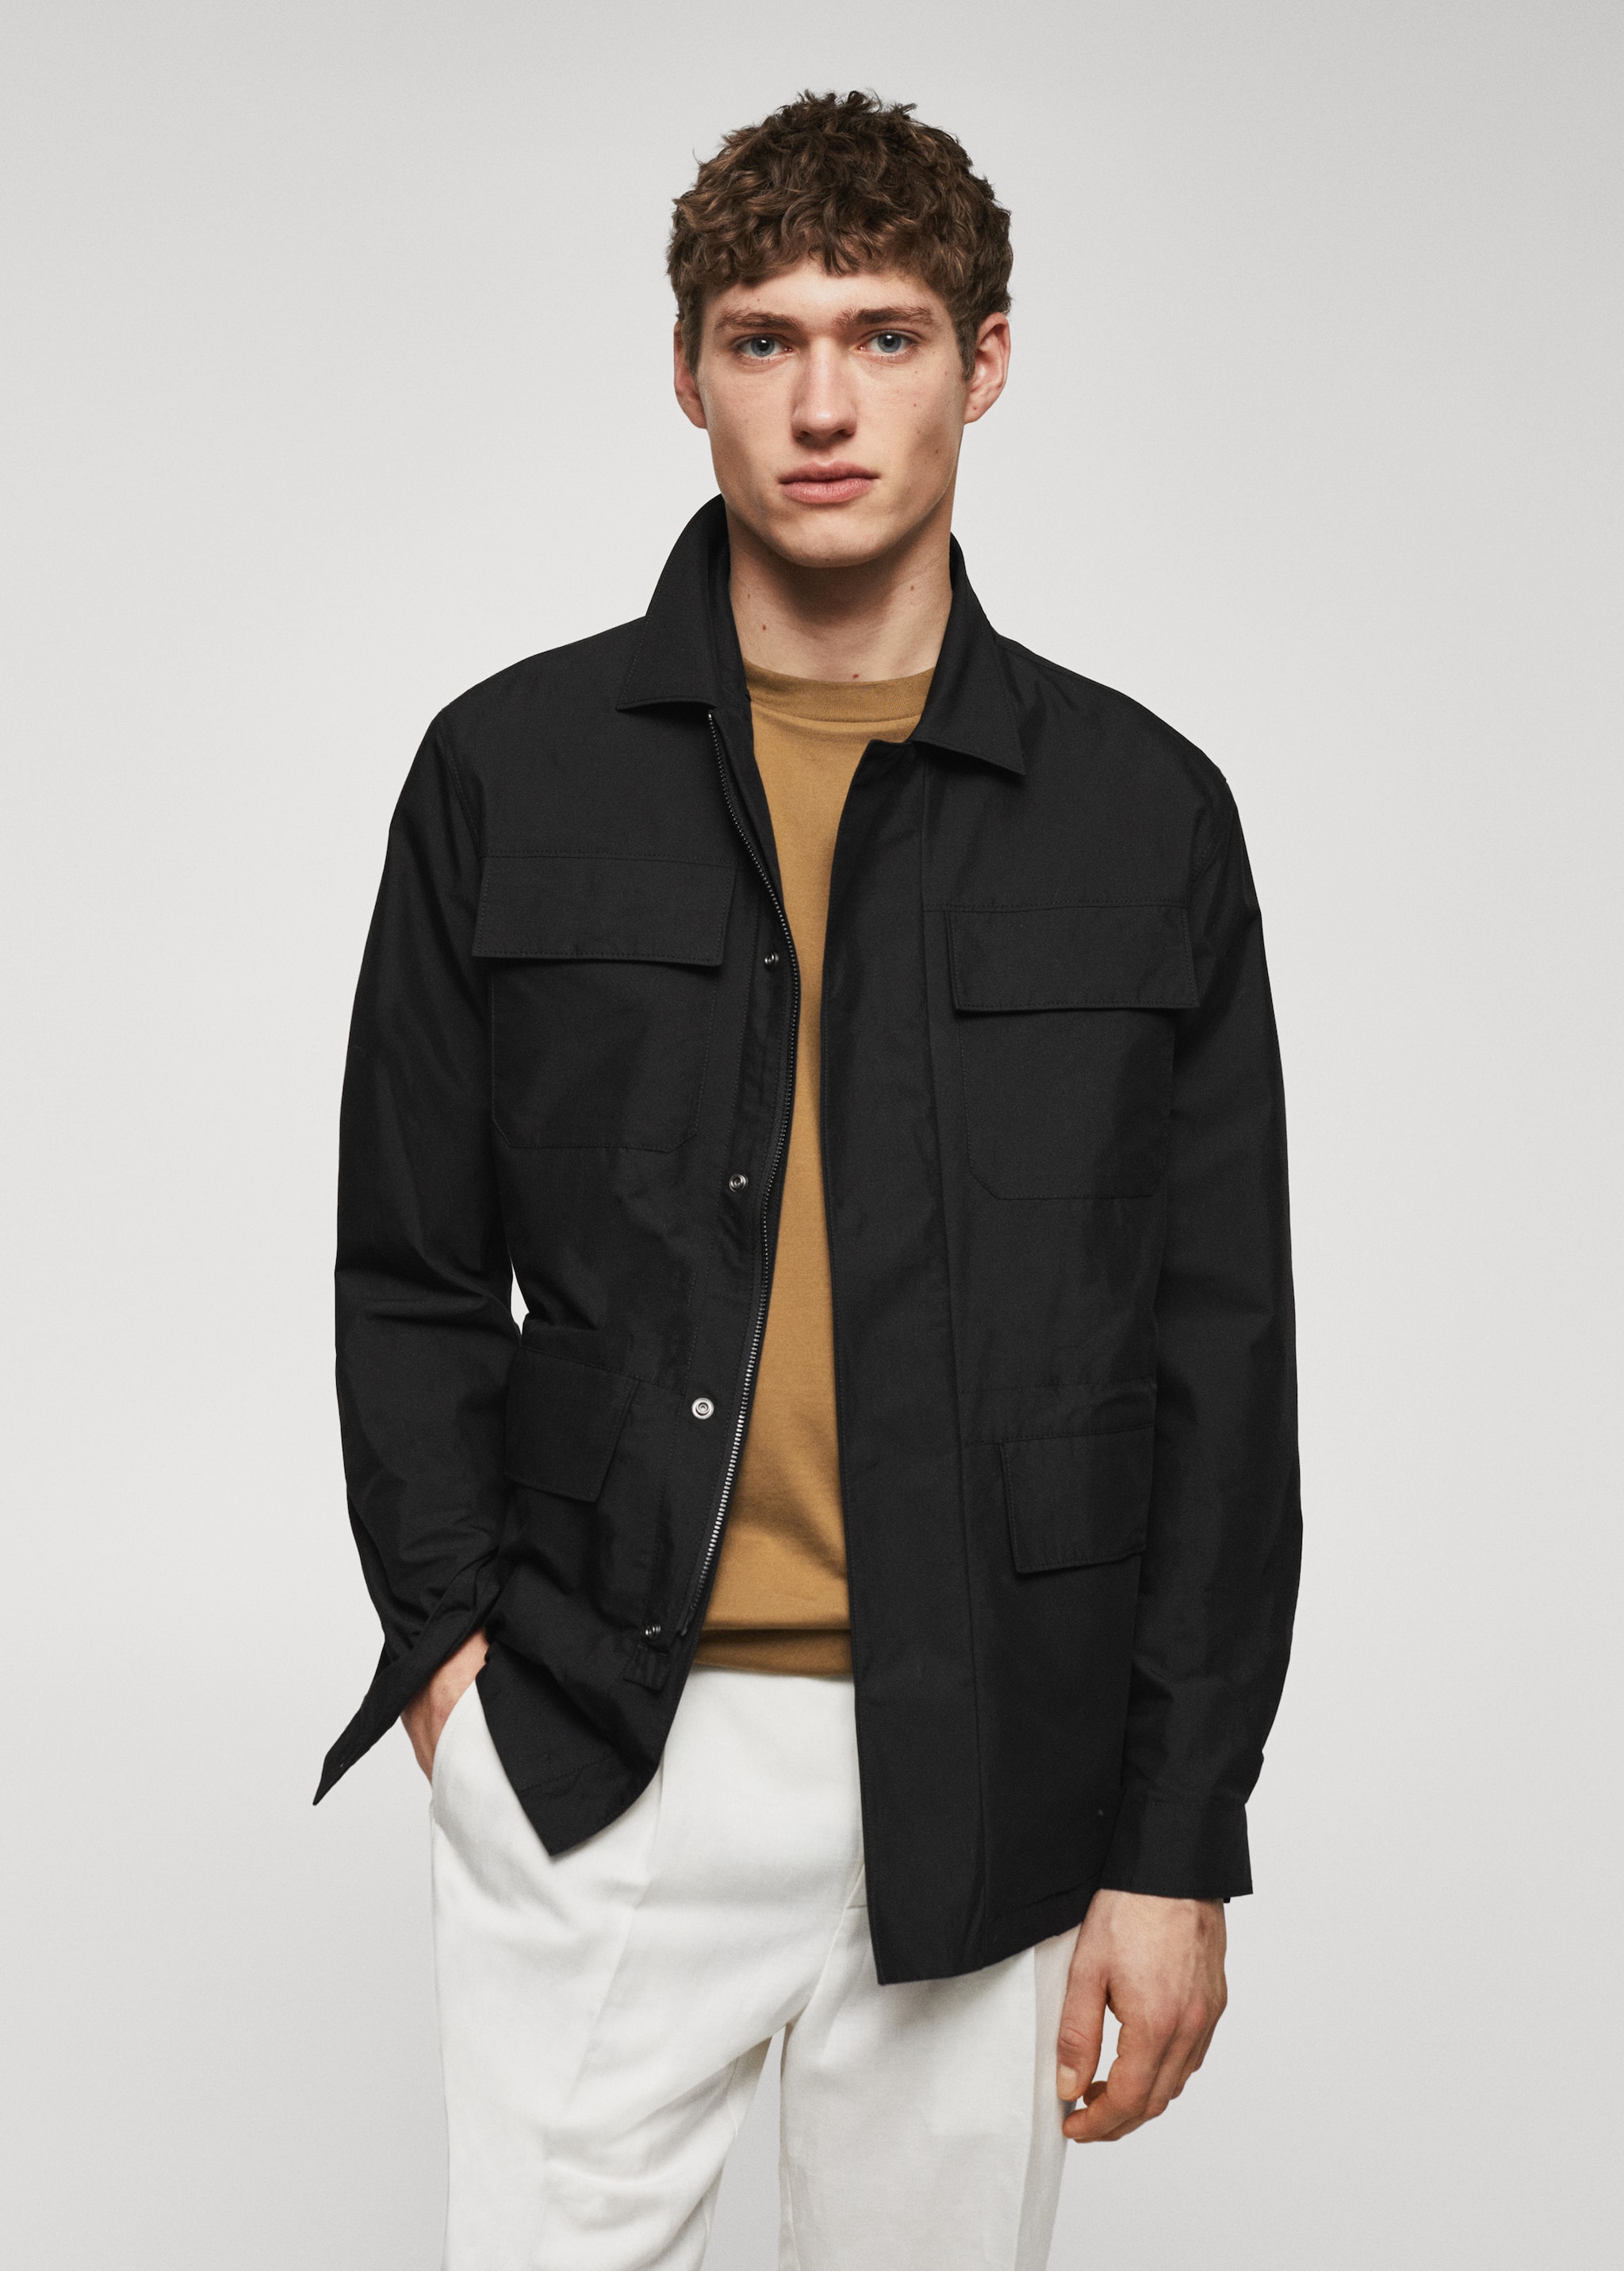 Cotton jacket with pockets - Medium plane